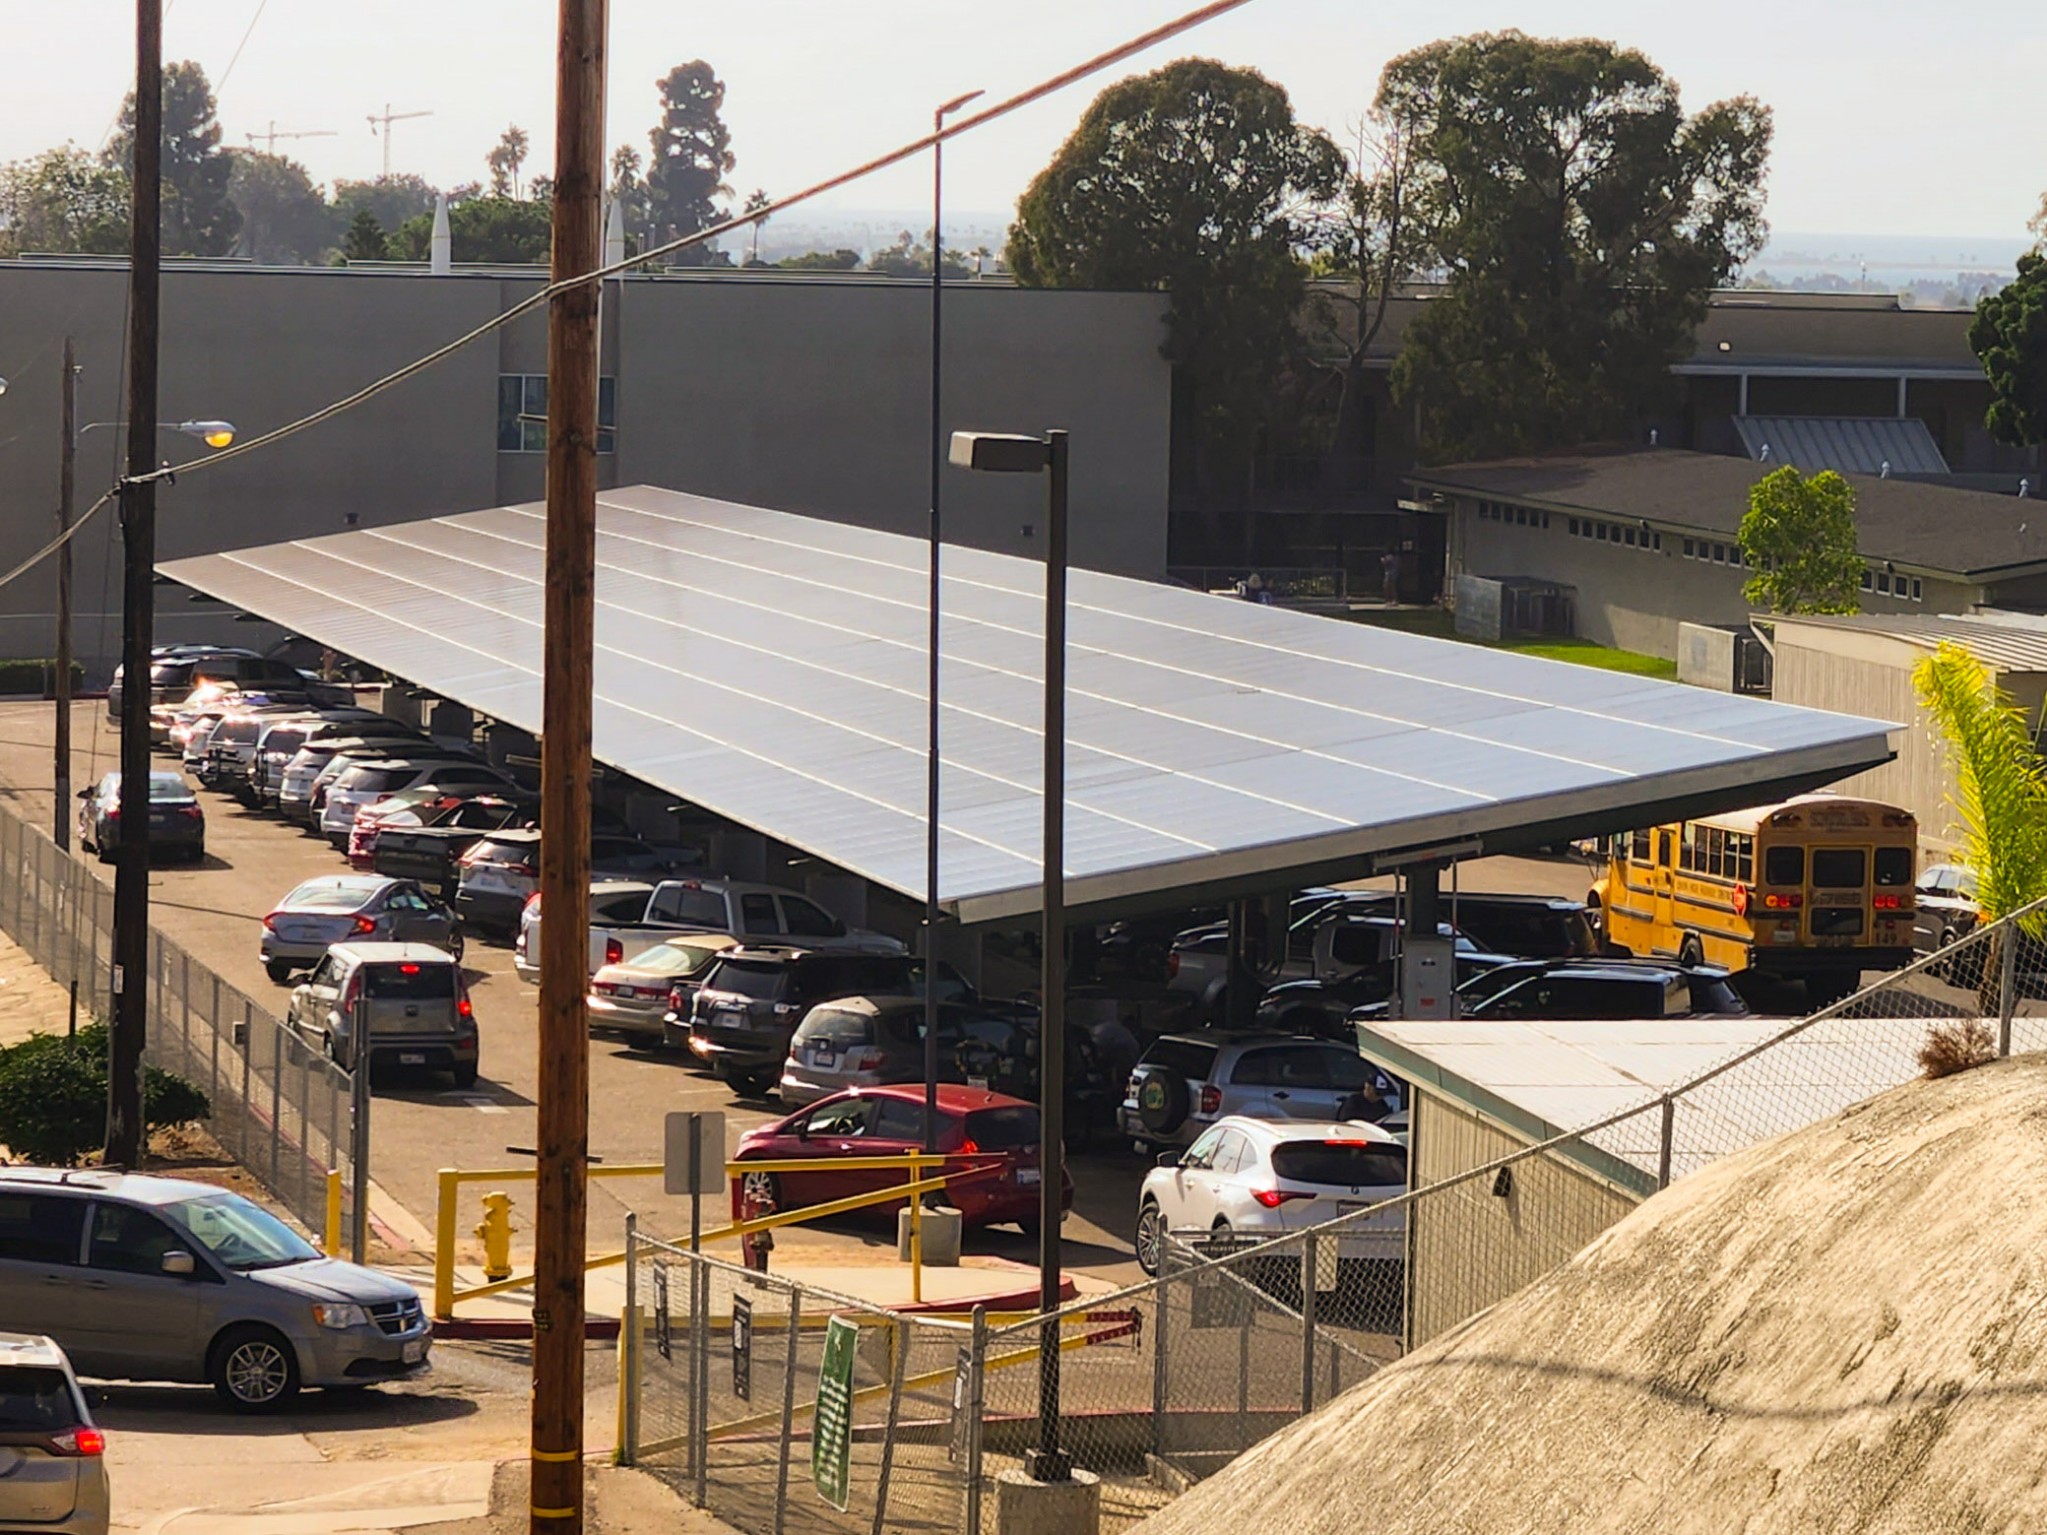 Solar panels covering parking lot